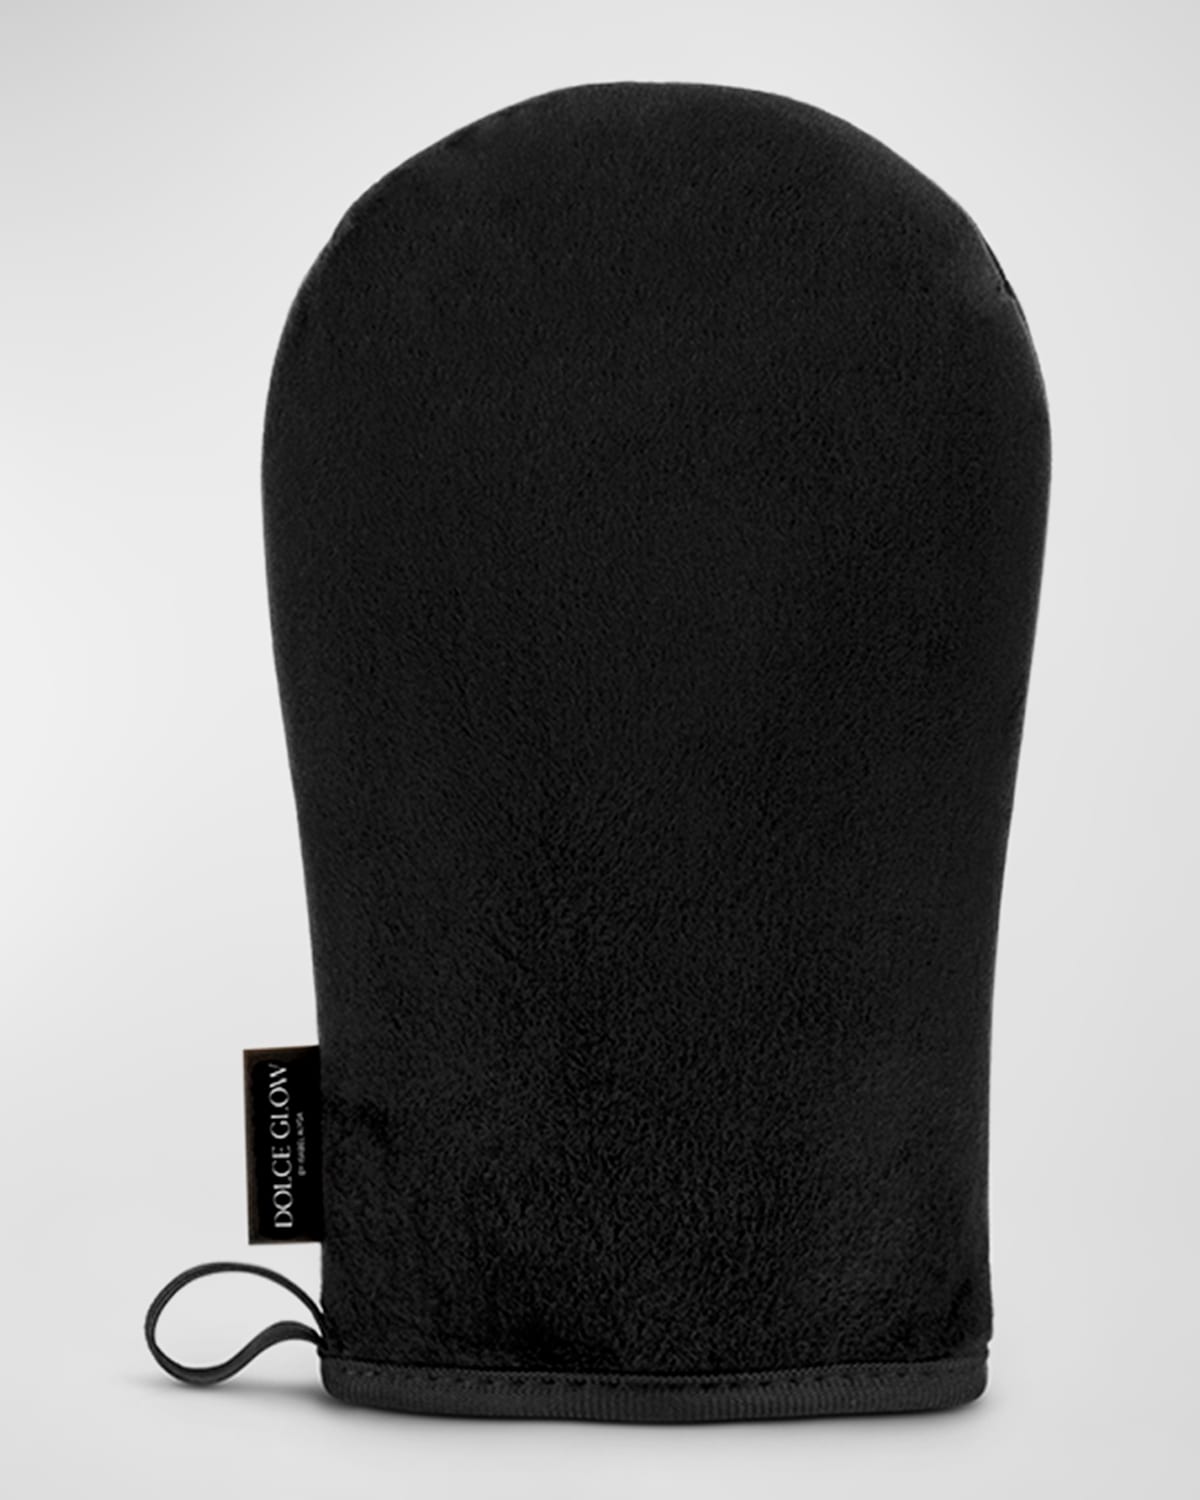 Dolce Glow Application Glove In Black